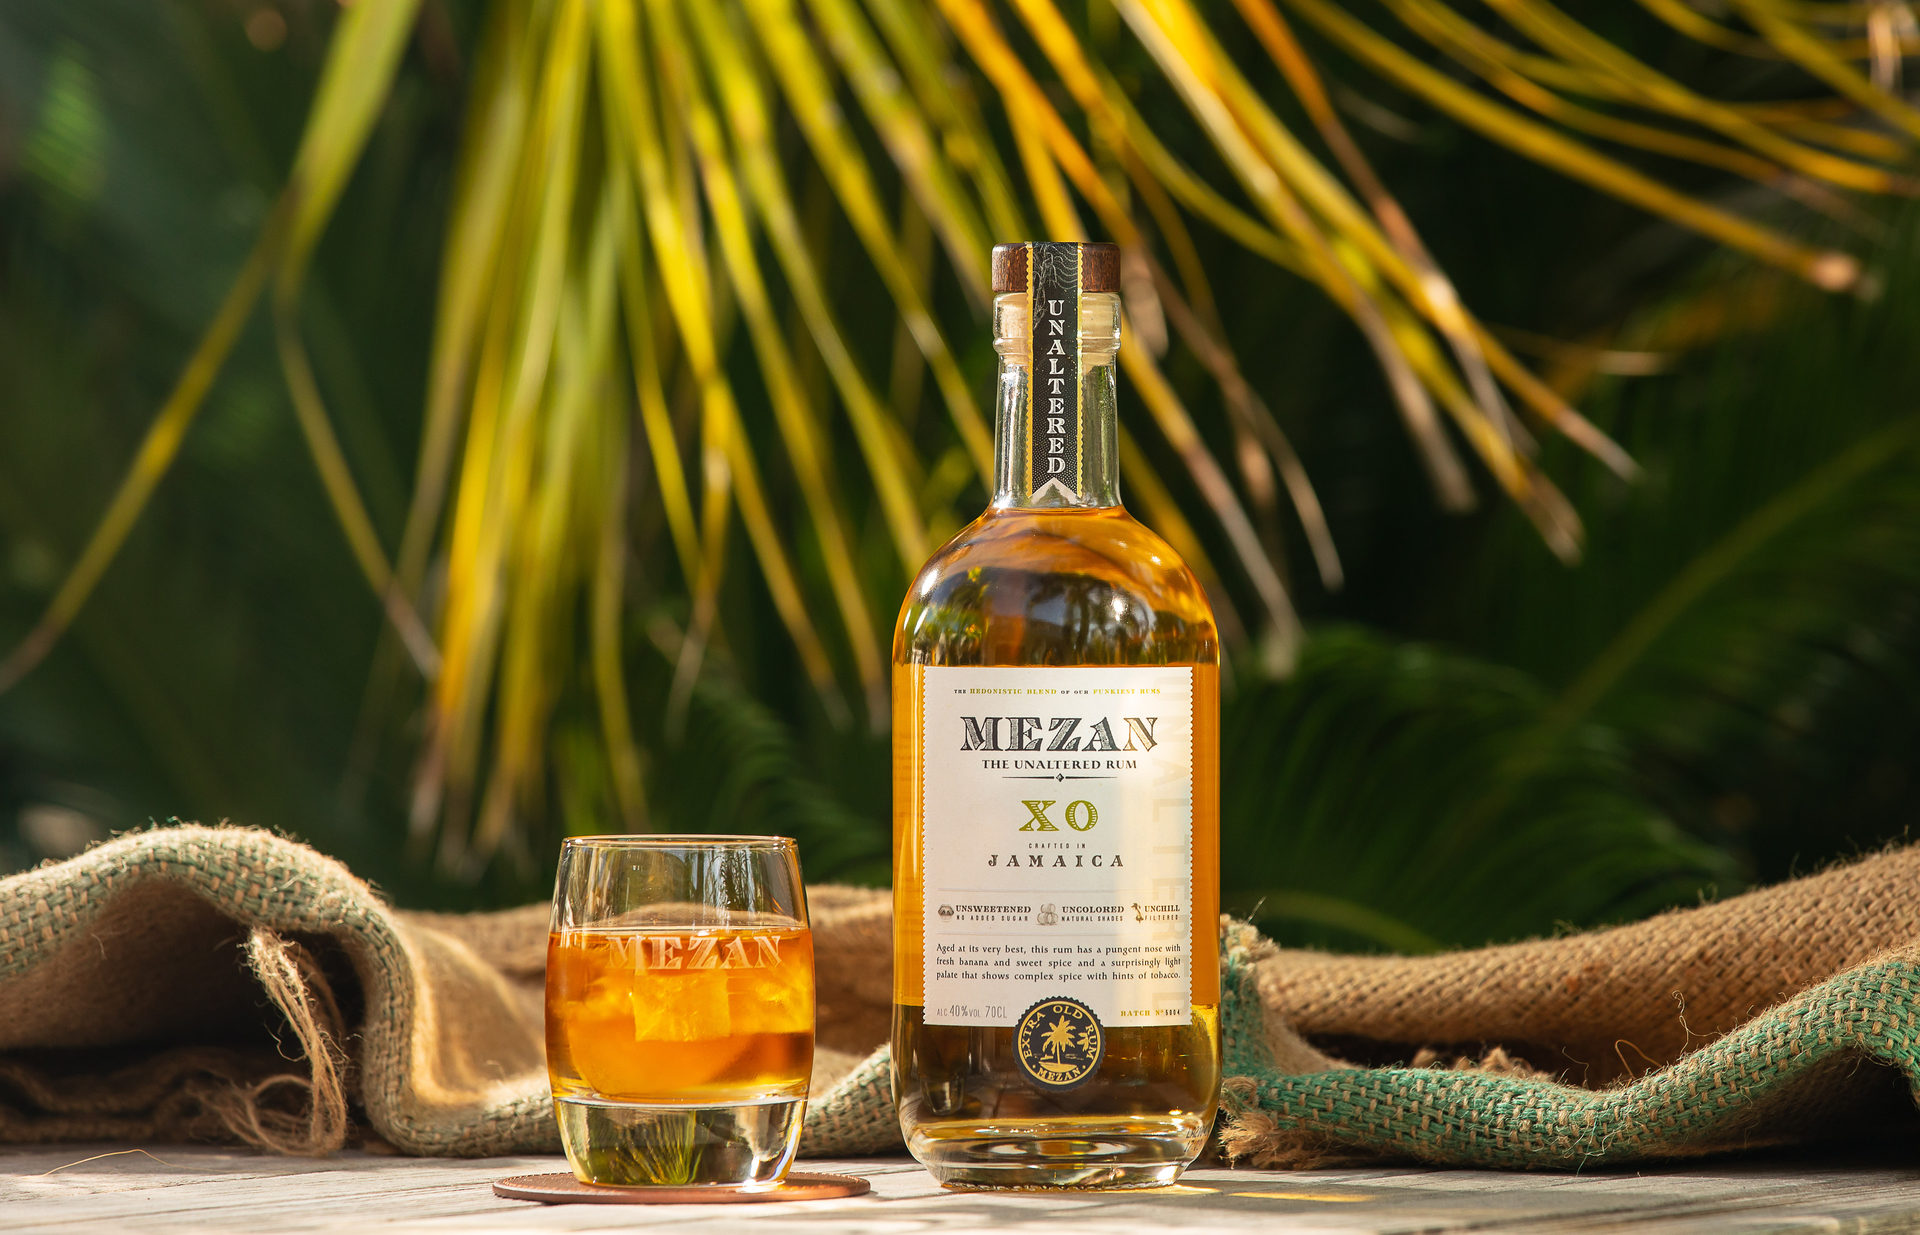 Mezan Rum | The Unaltered Rum the Caribbean of